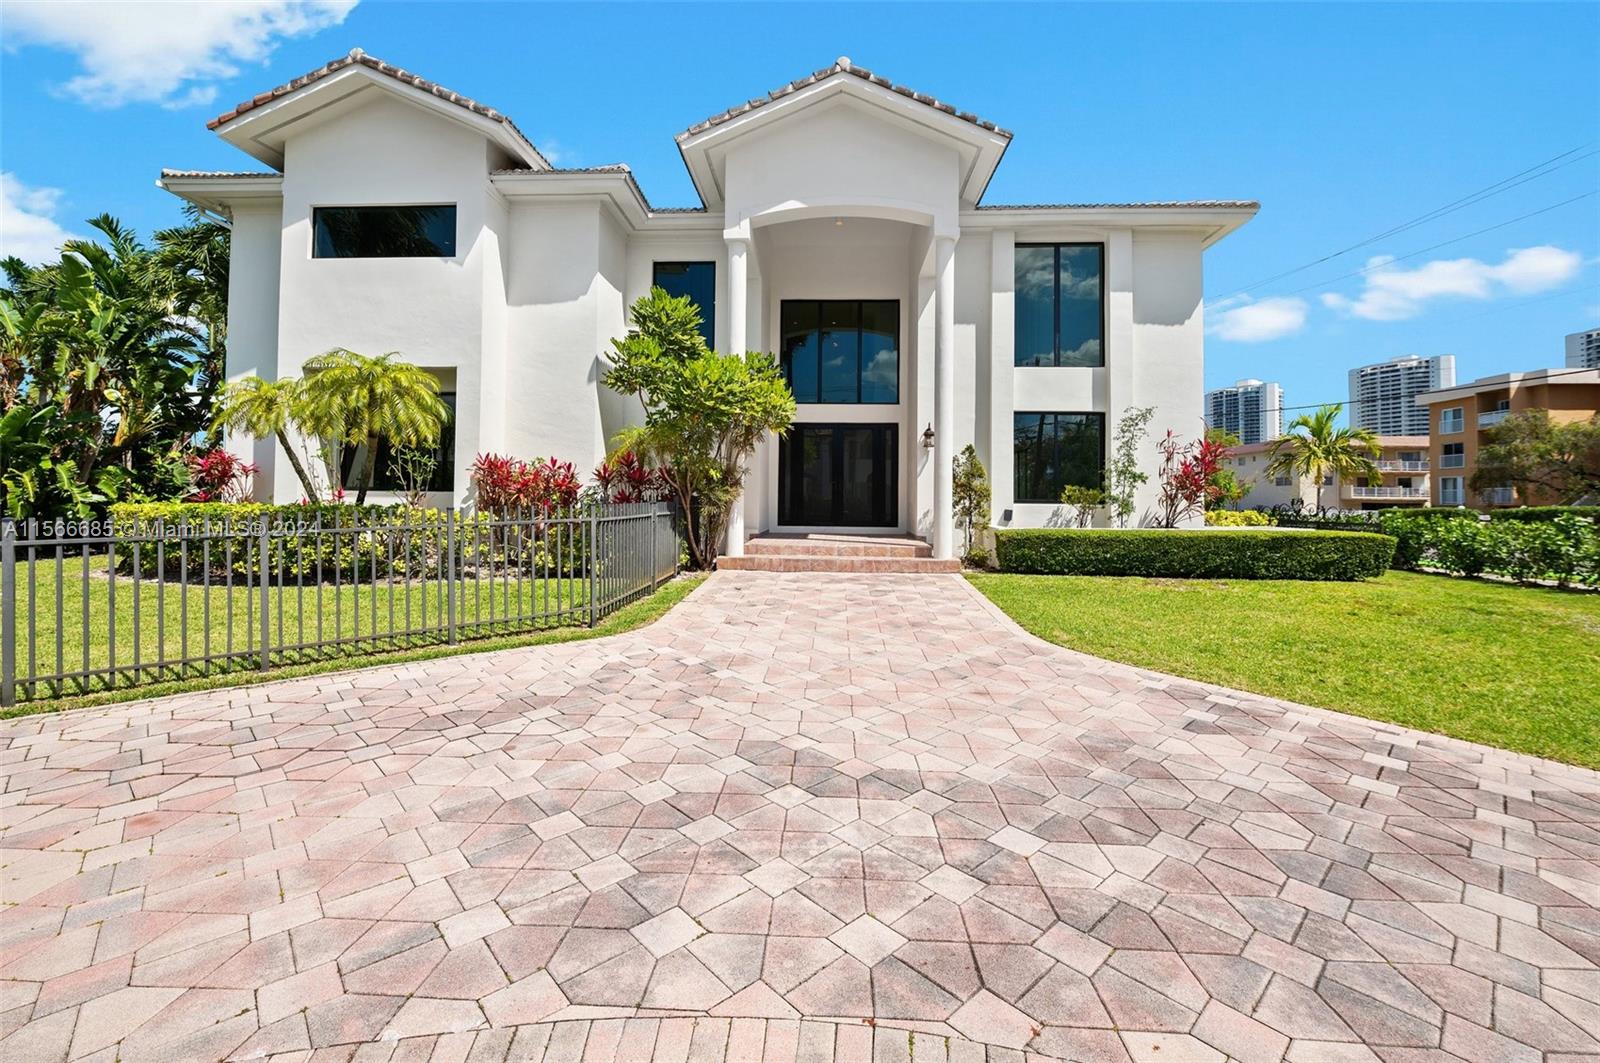 Property for Sale at 3461 Ne 170th St, North Miami Beach, Miami-Dade County, Florida - Bedrooms: 5 
Bathrooms: 6.5  - $5,600,000